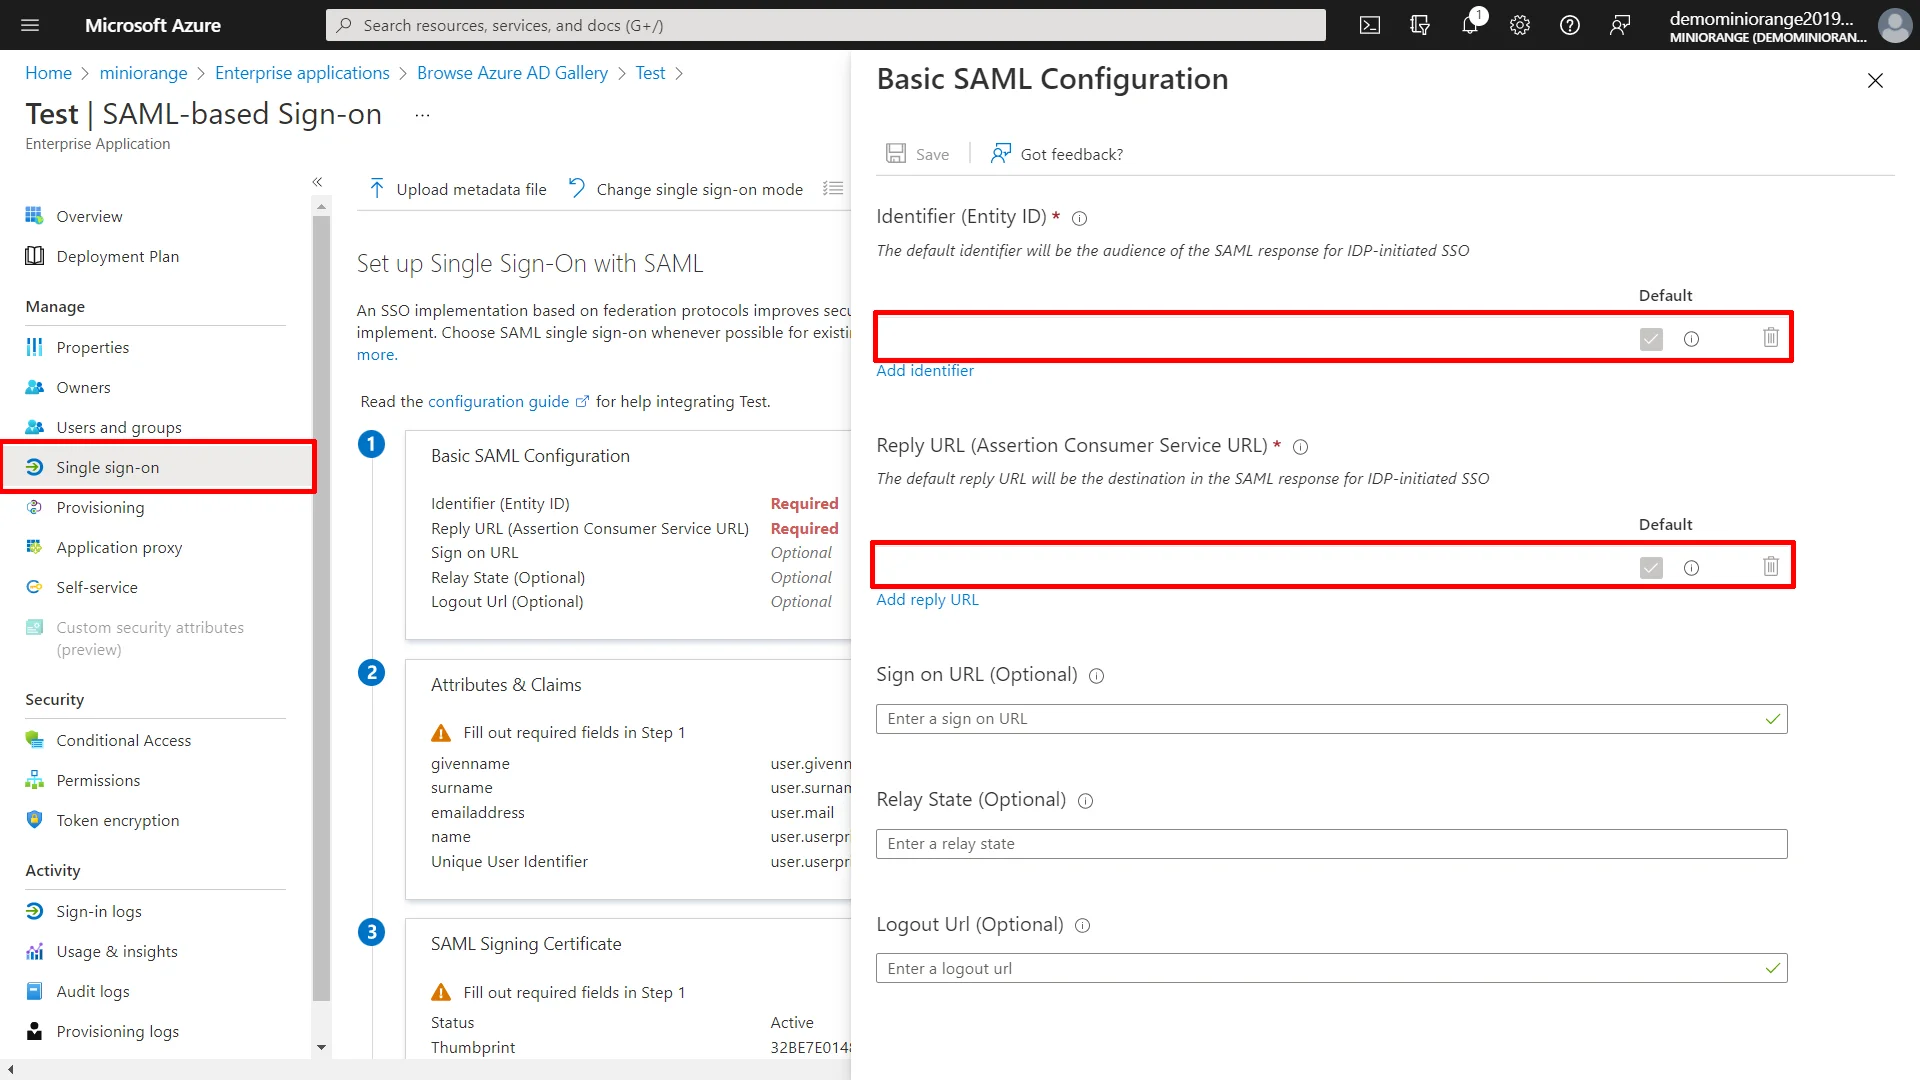 ASP.NET SAML Single Sign-On (SSO) using Azure AD (Microsoft Entra ID) as IDP - edit basic saml configuration